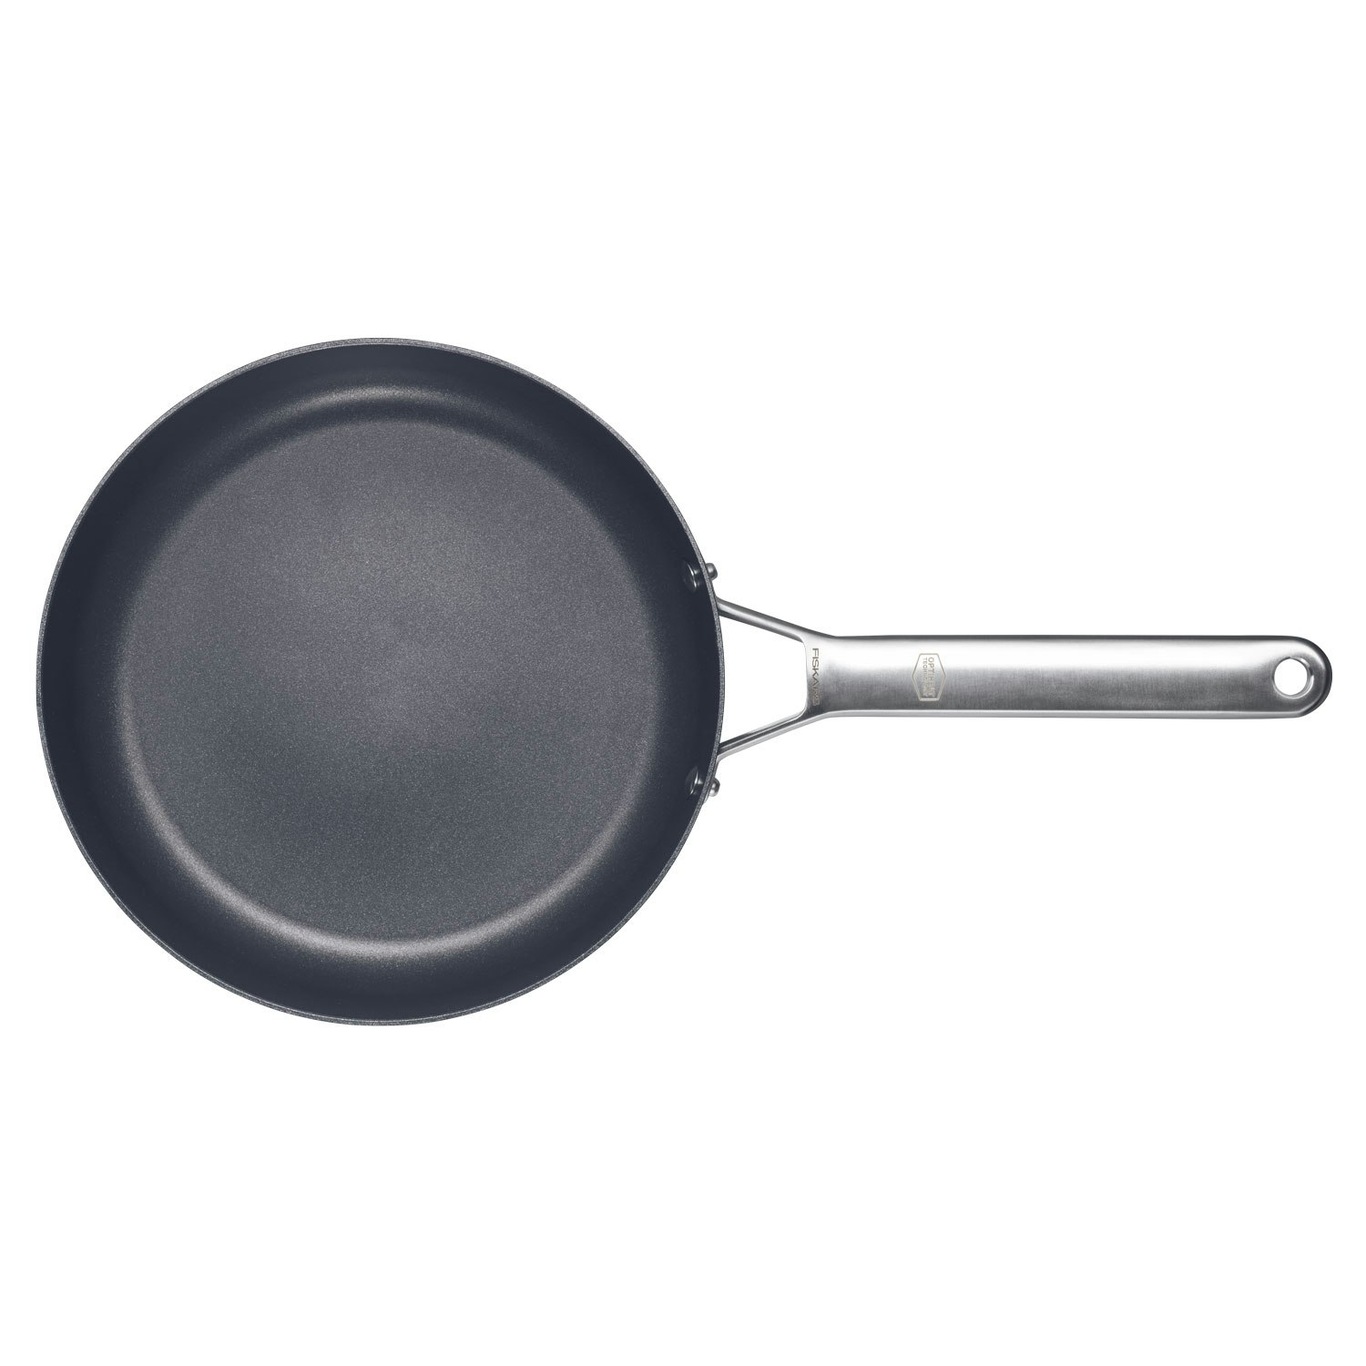 Taiten Frying Pan, 26 cm